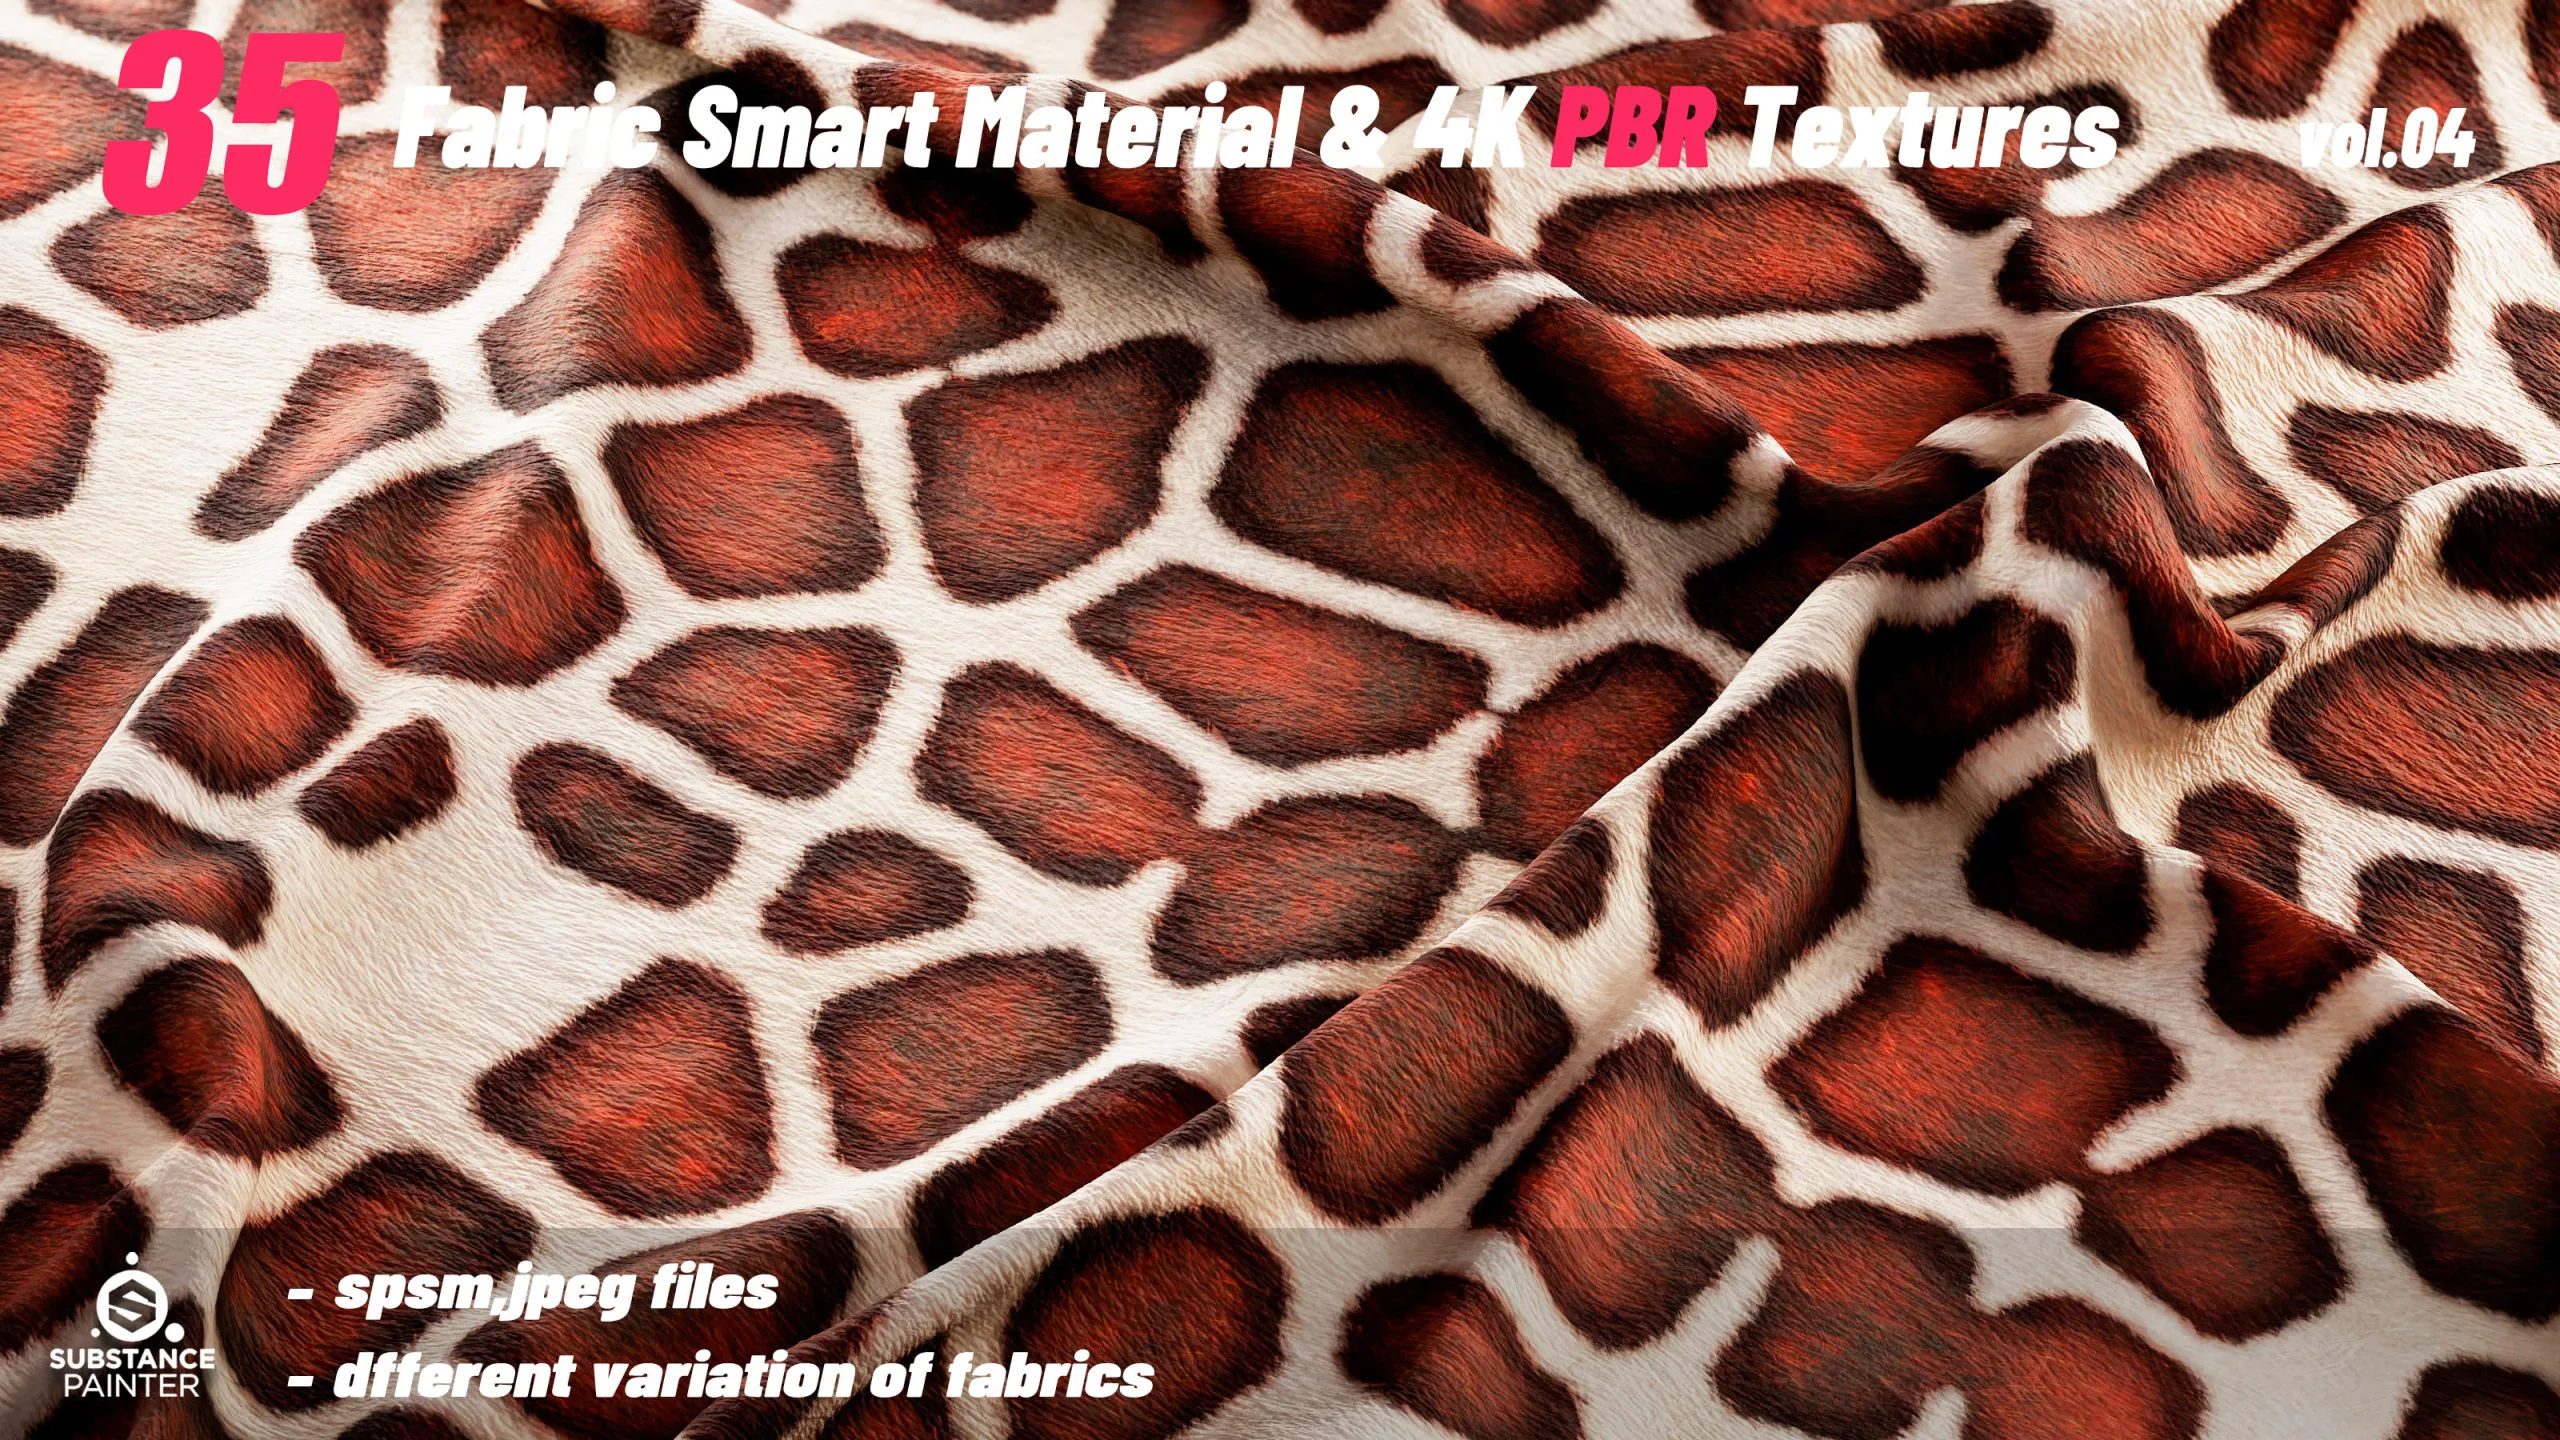 35 High Quality Fabric Smart Material Bundle + 4K PBR Texture_VOL.04